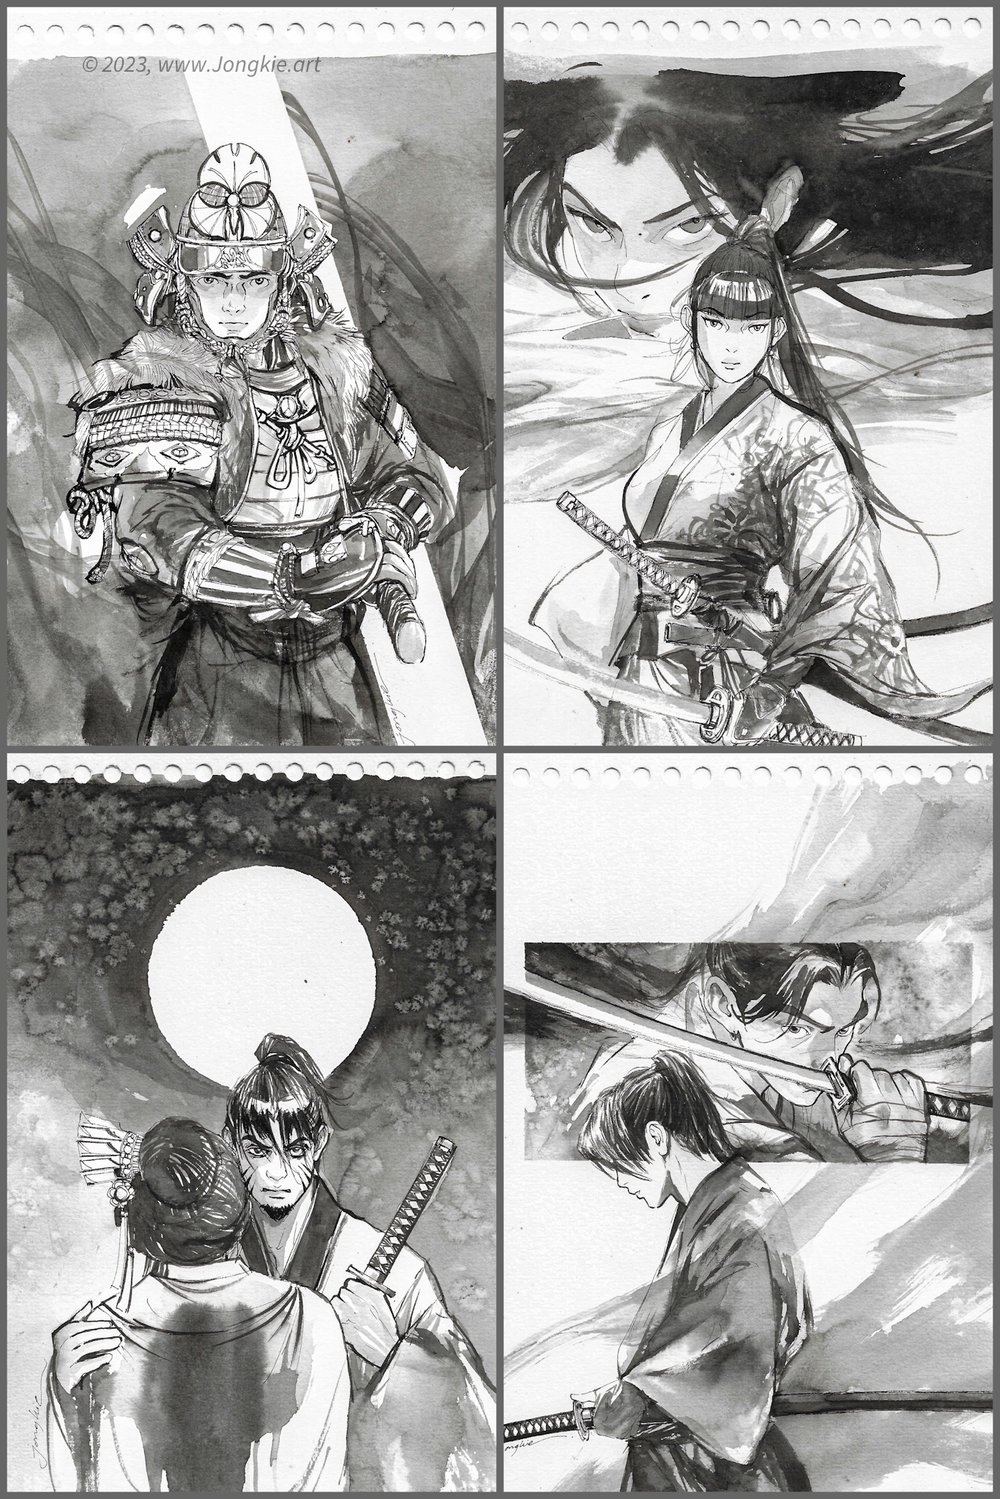 Samurai Sketchbook No. 1